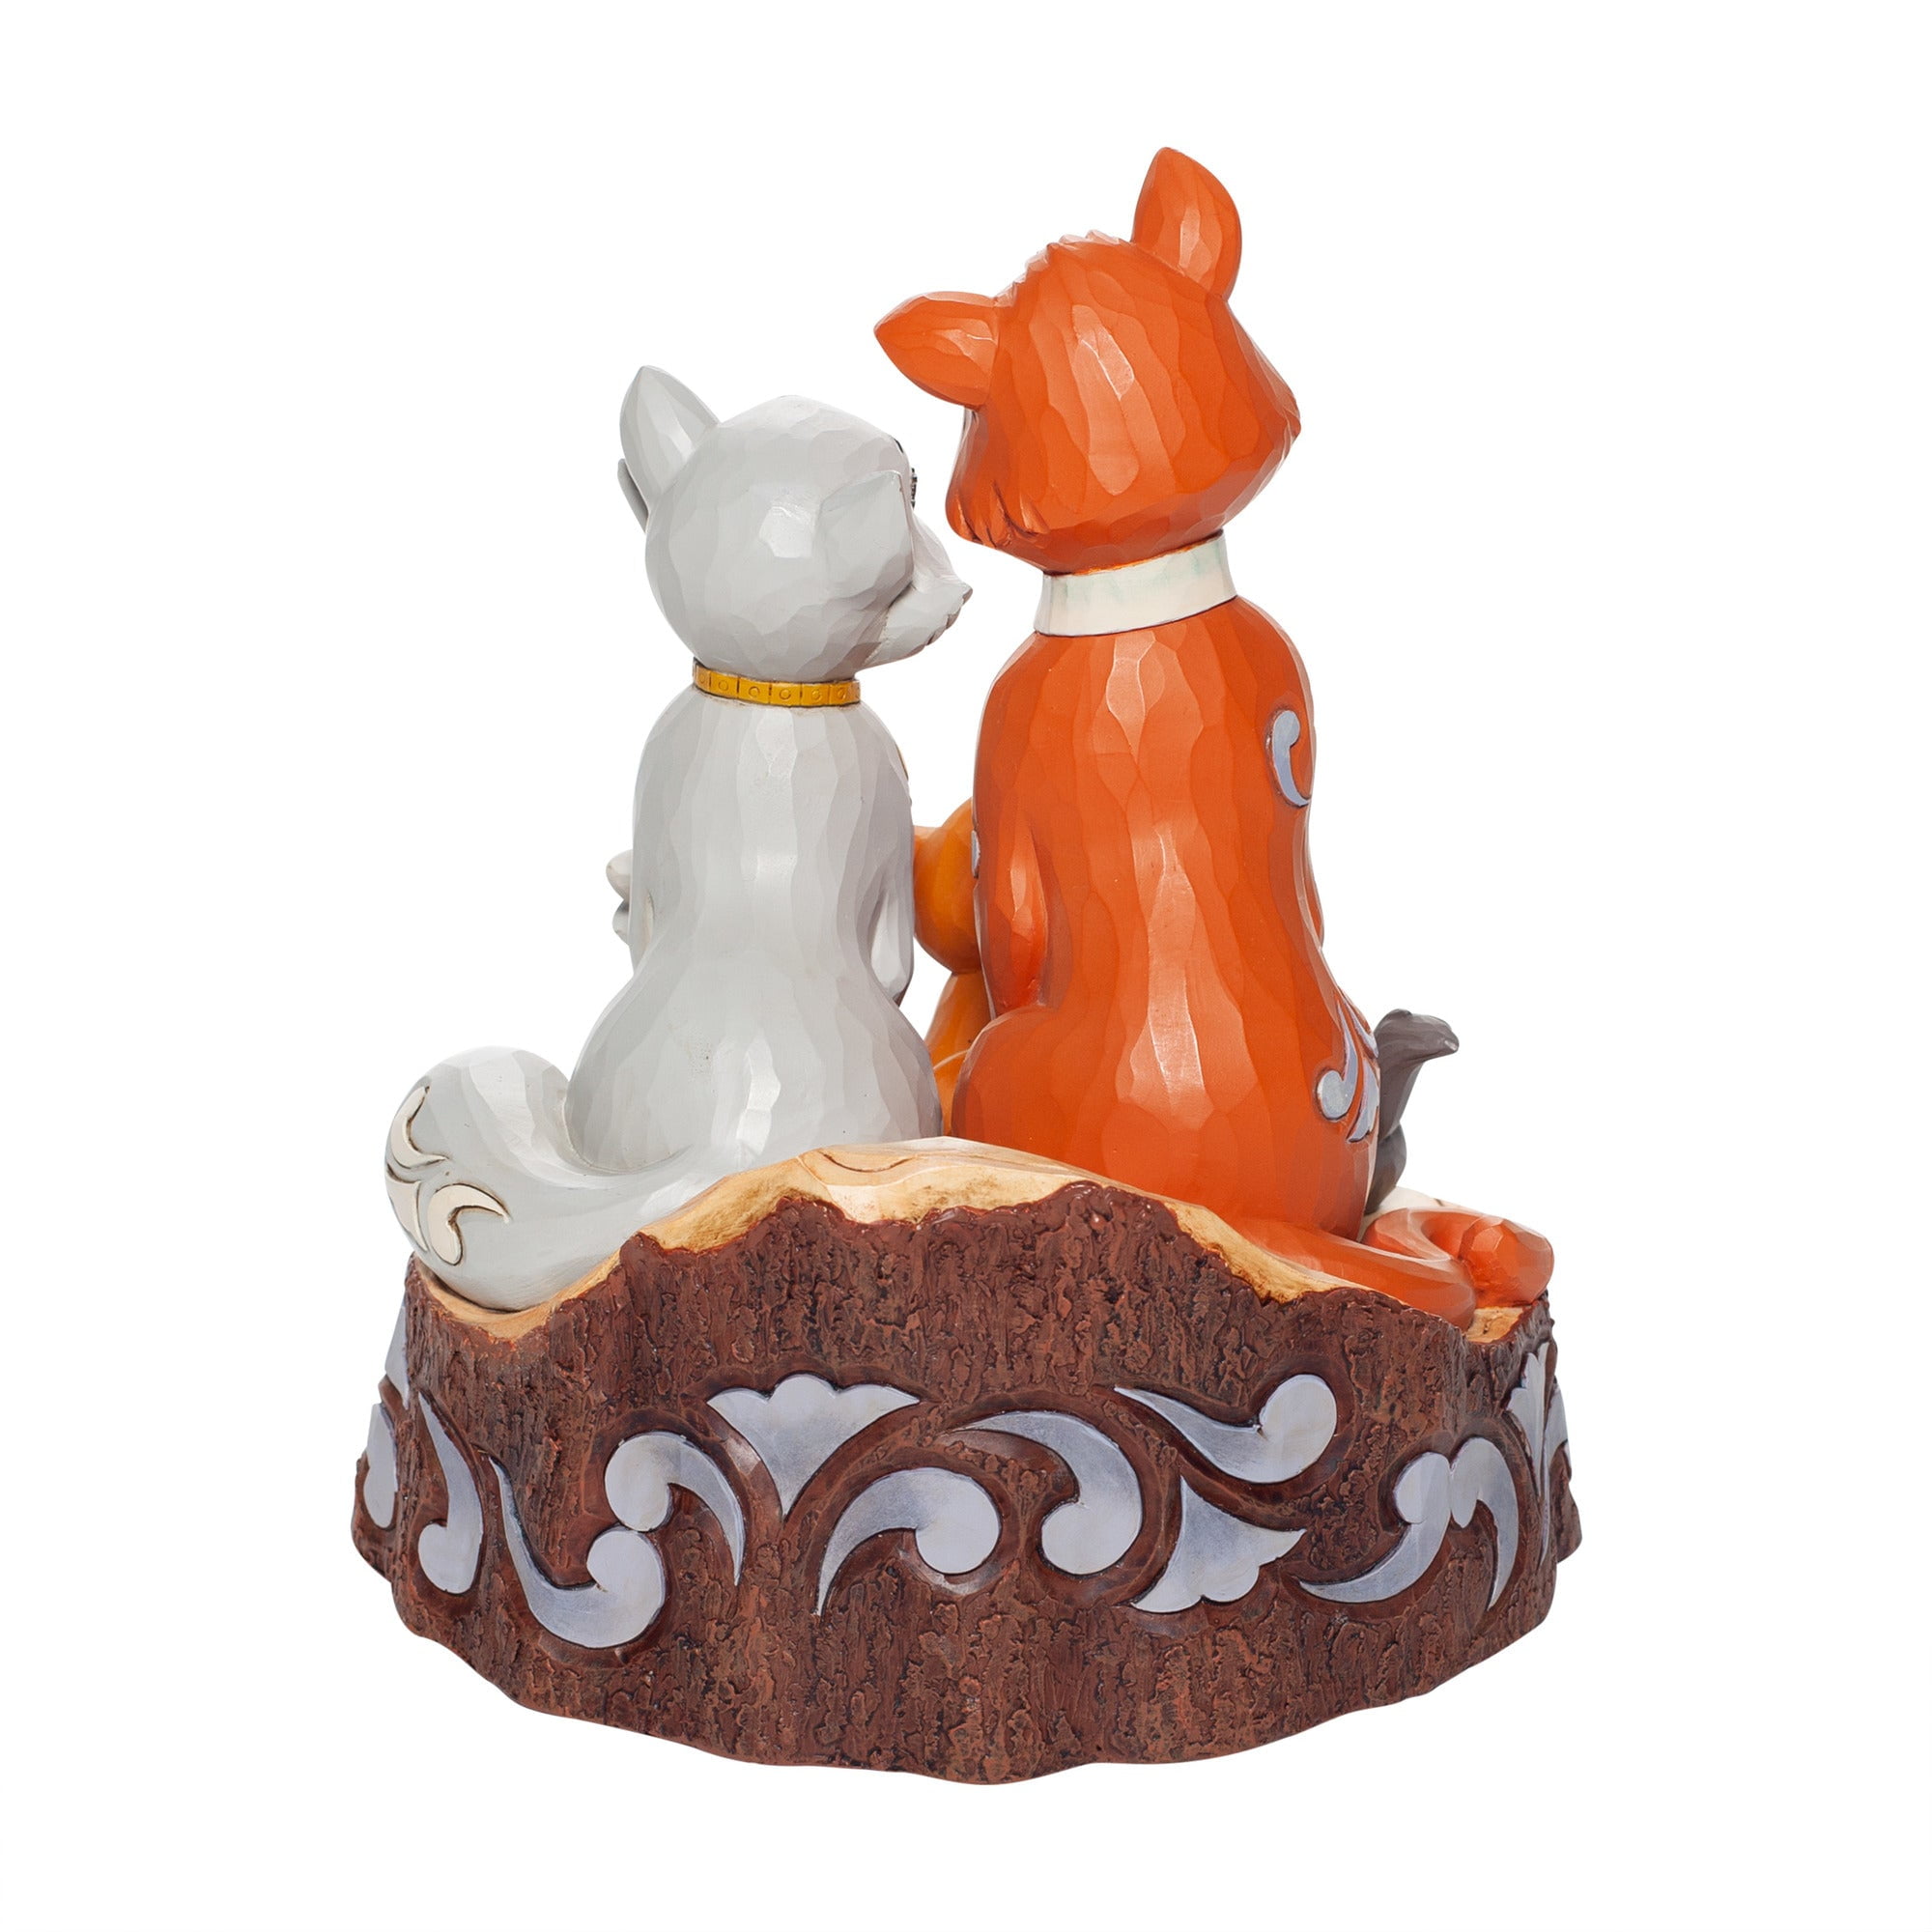 Jim Shore Disney Tradition Aristocats “Marie Christmas Purrfect Kitty  Figurine (6010875)